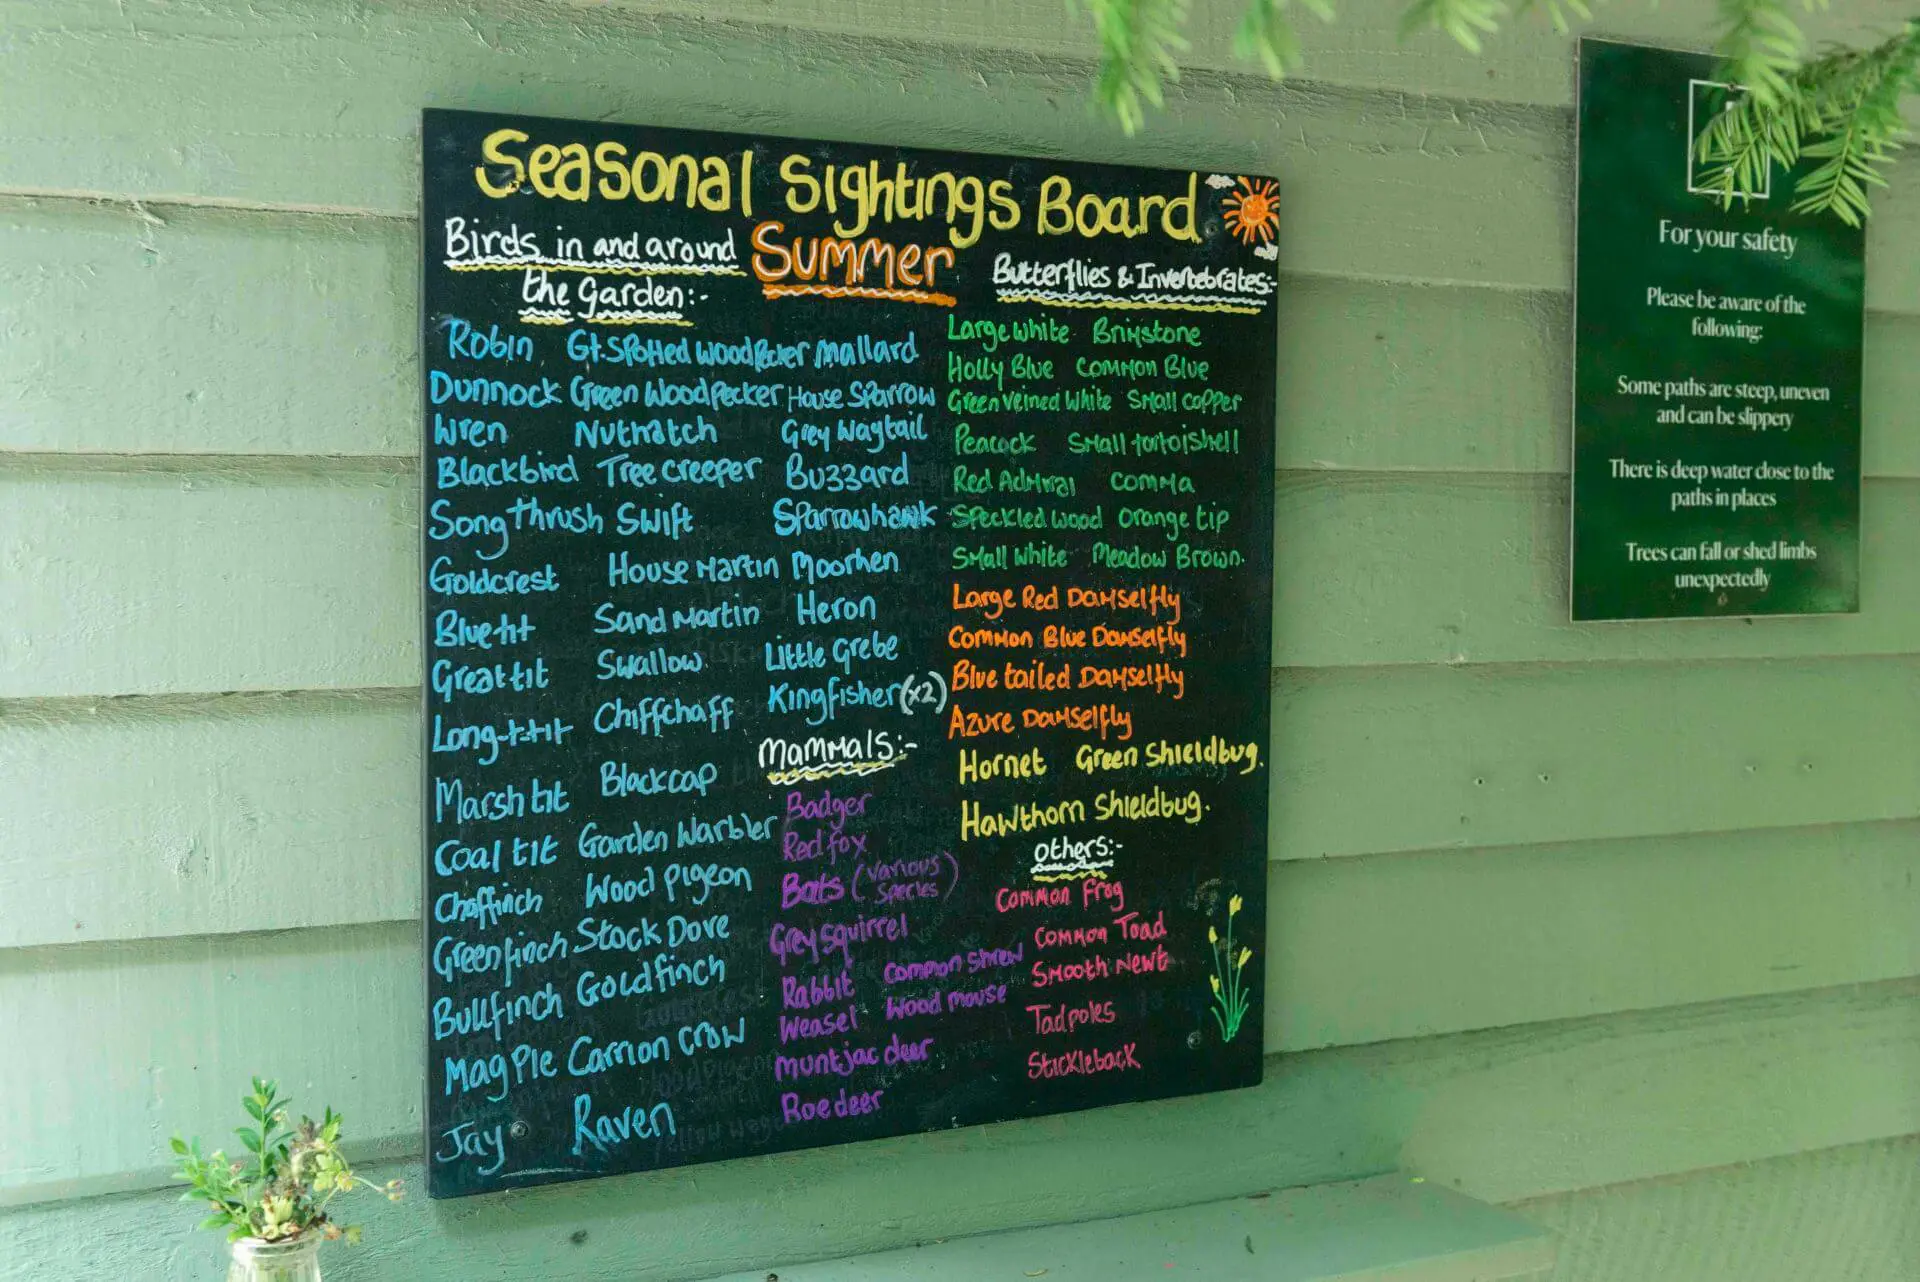 Seasonal Sightings Board at Prior Park Landscape Garden